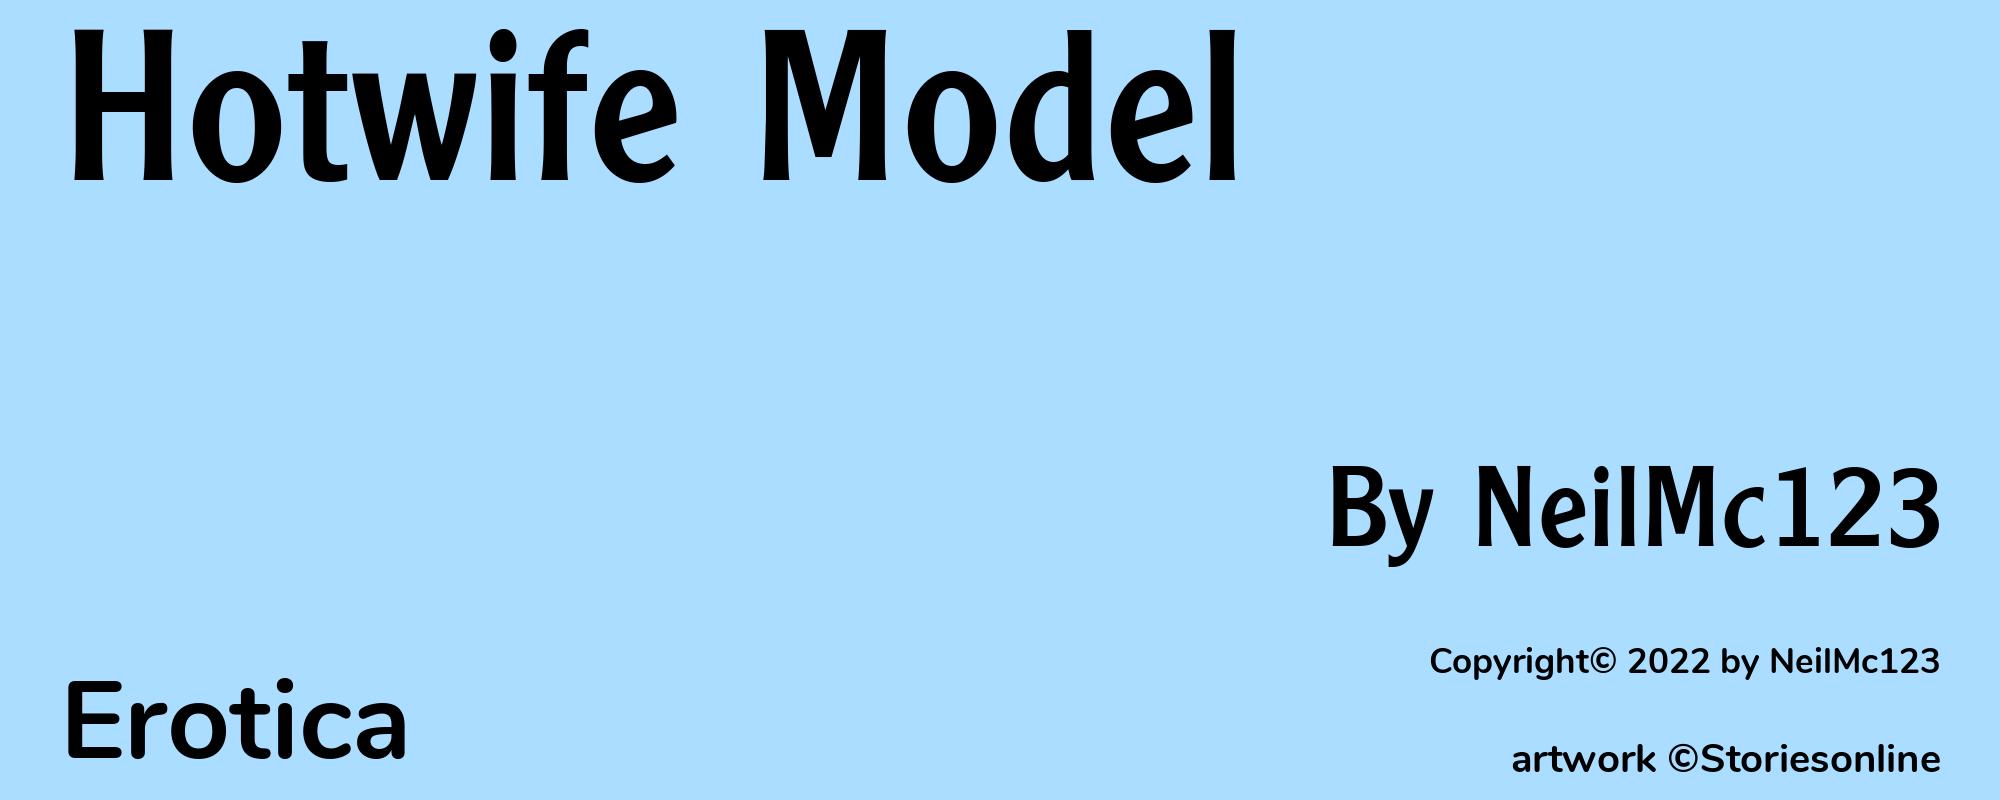 Hotwife Model - Cover